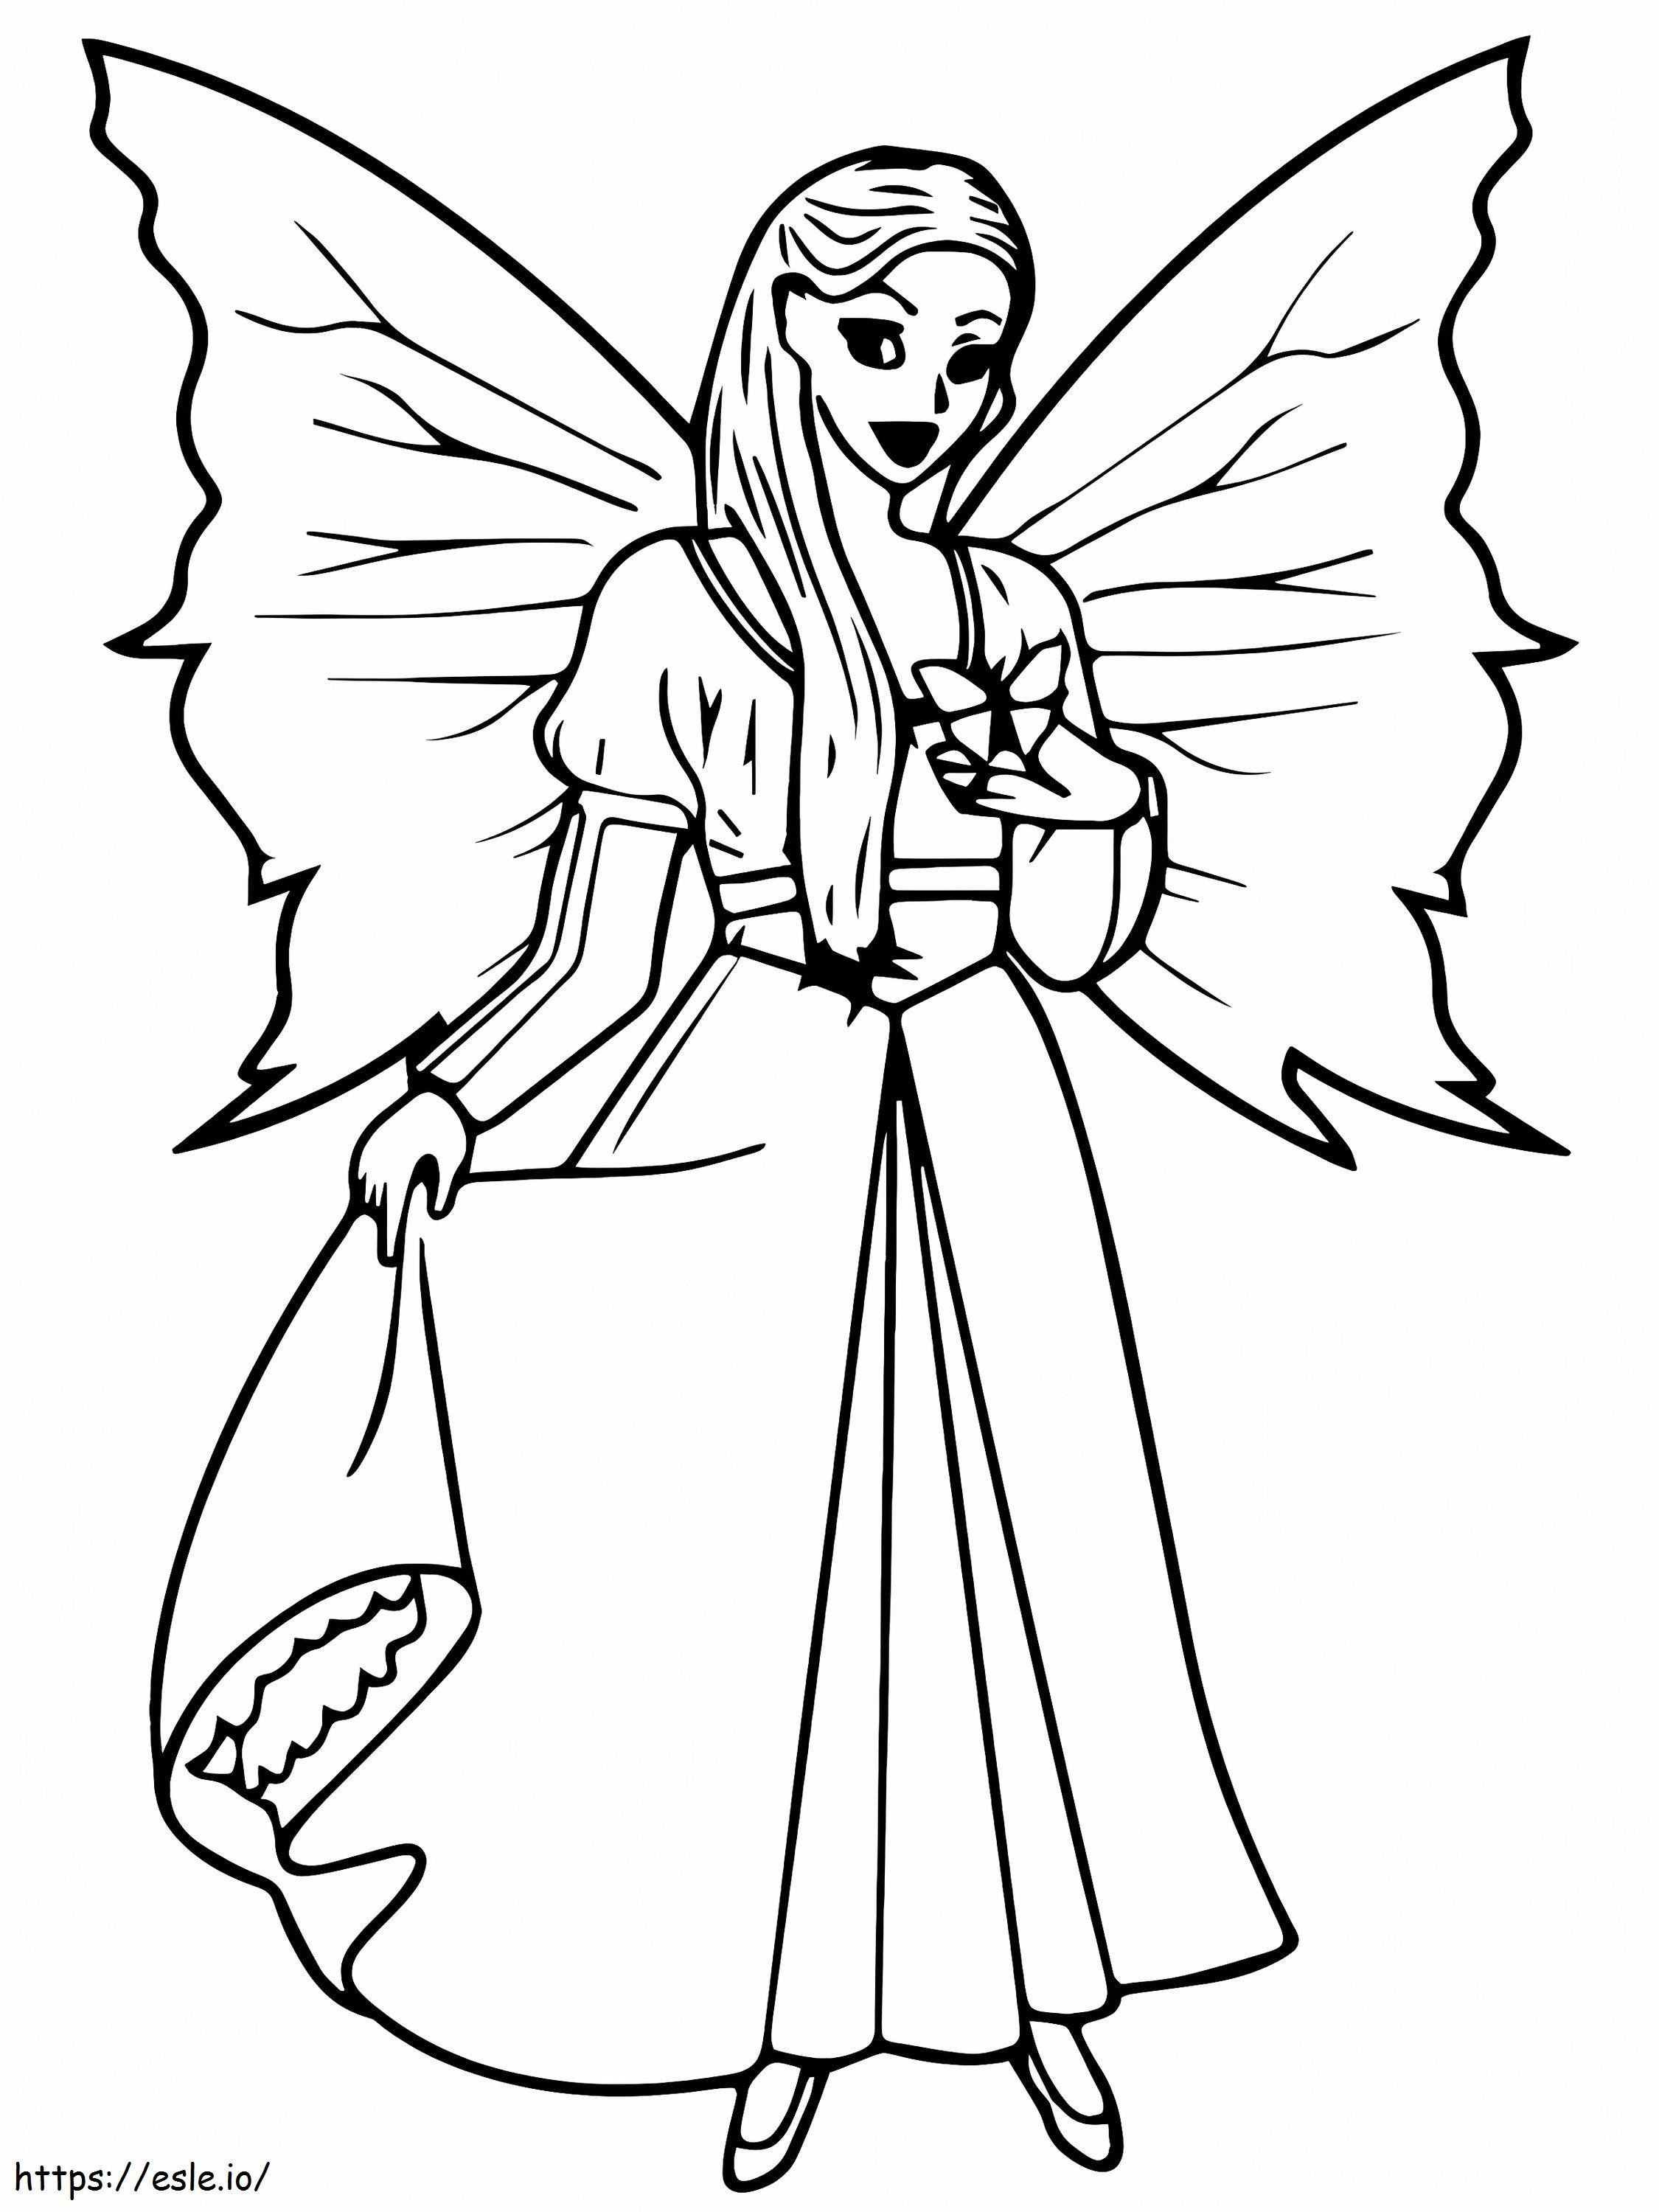 Caring Fairy Princess coloring page